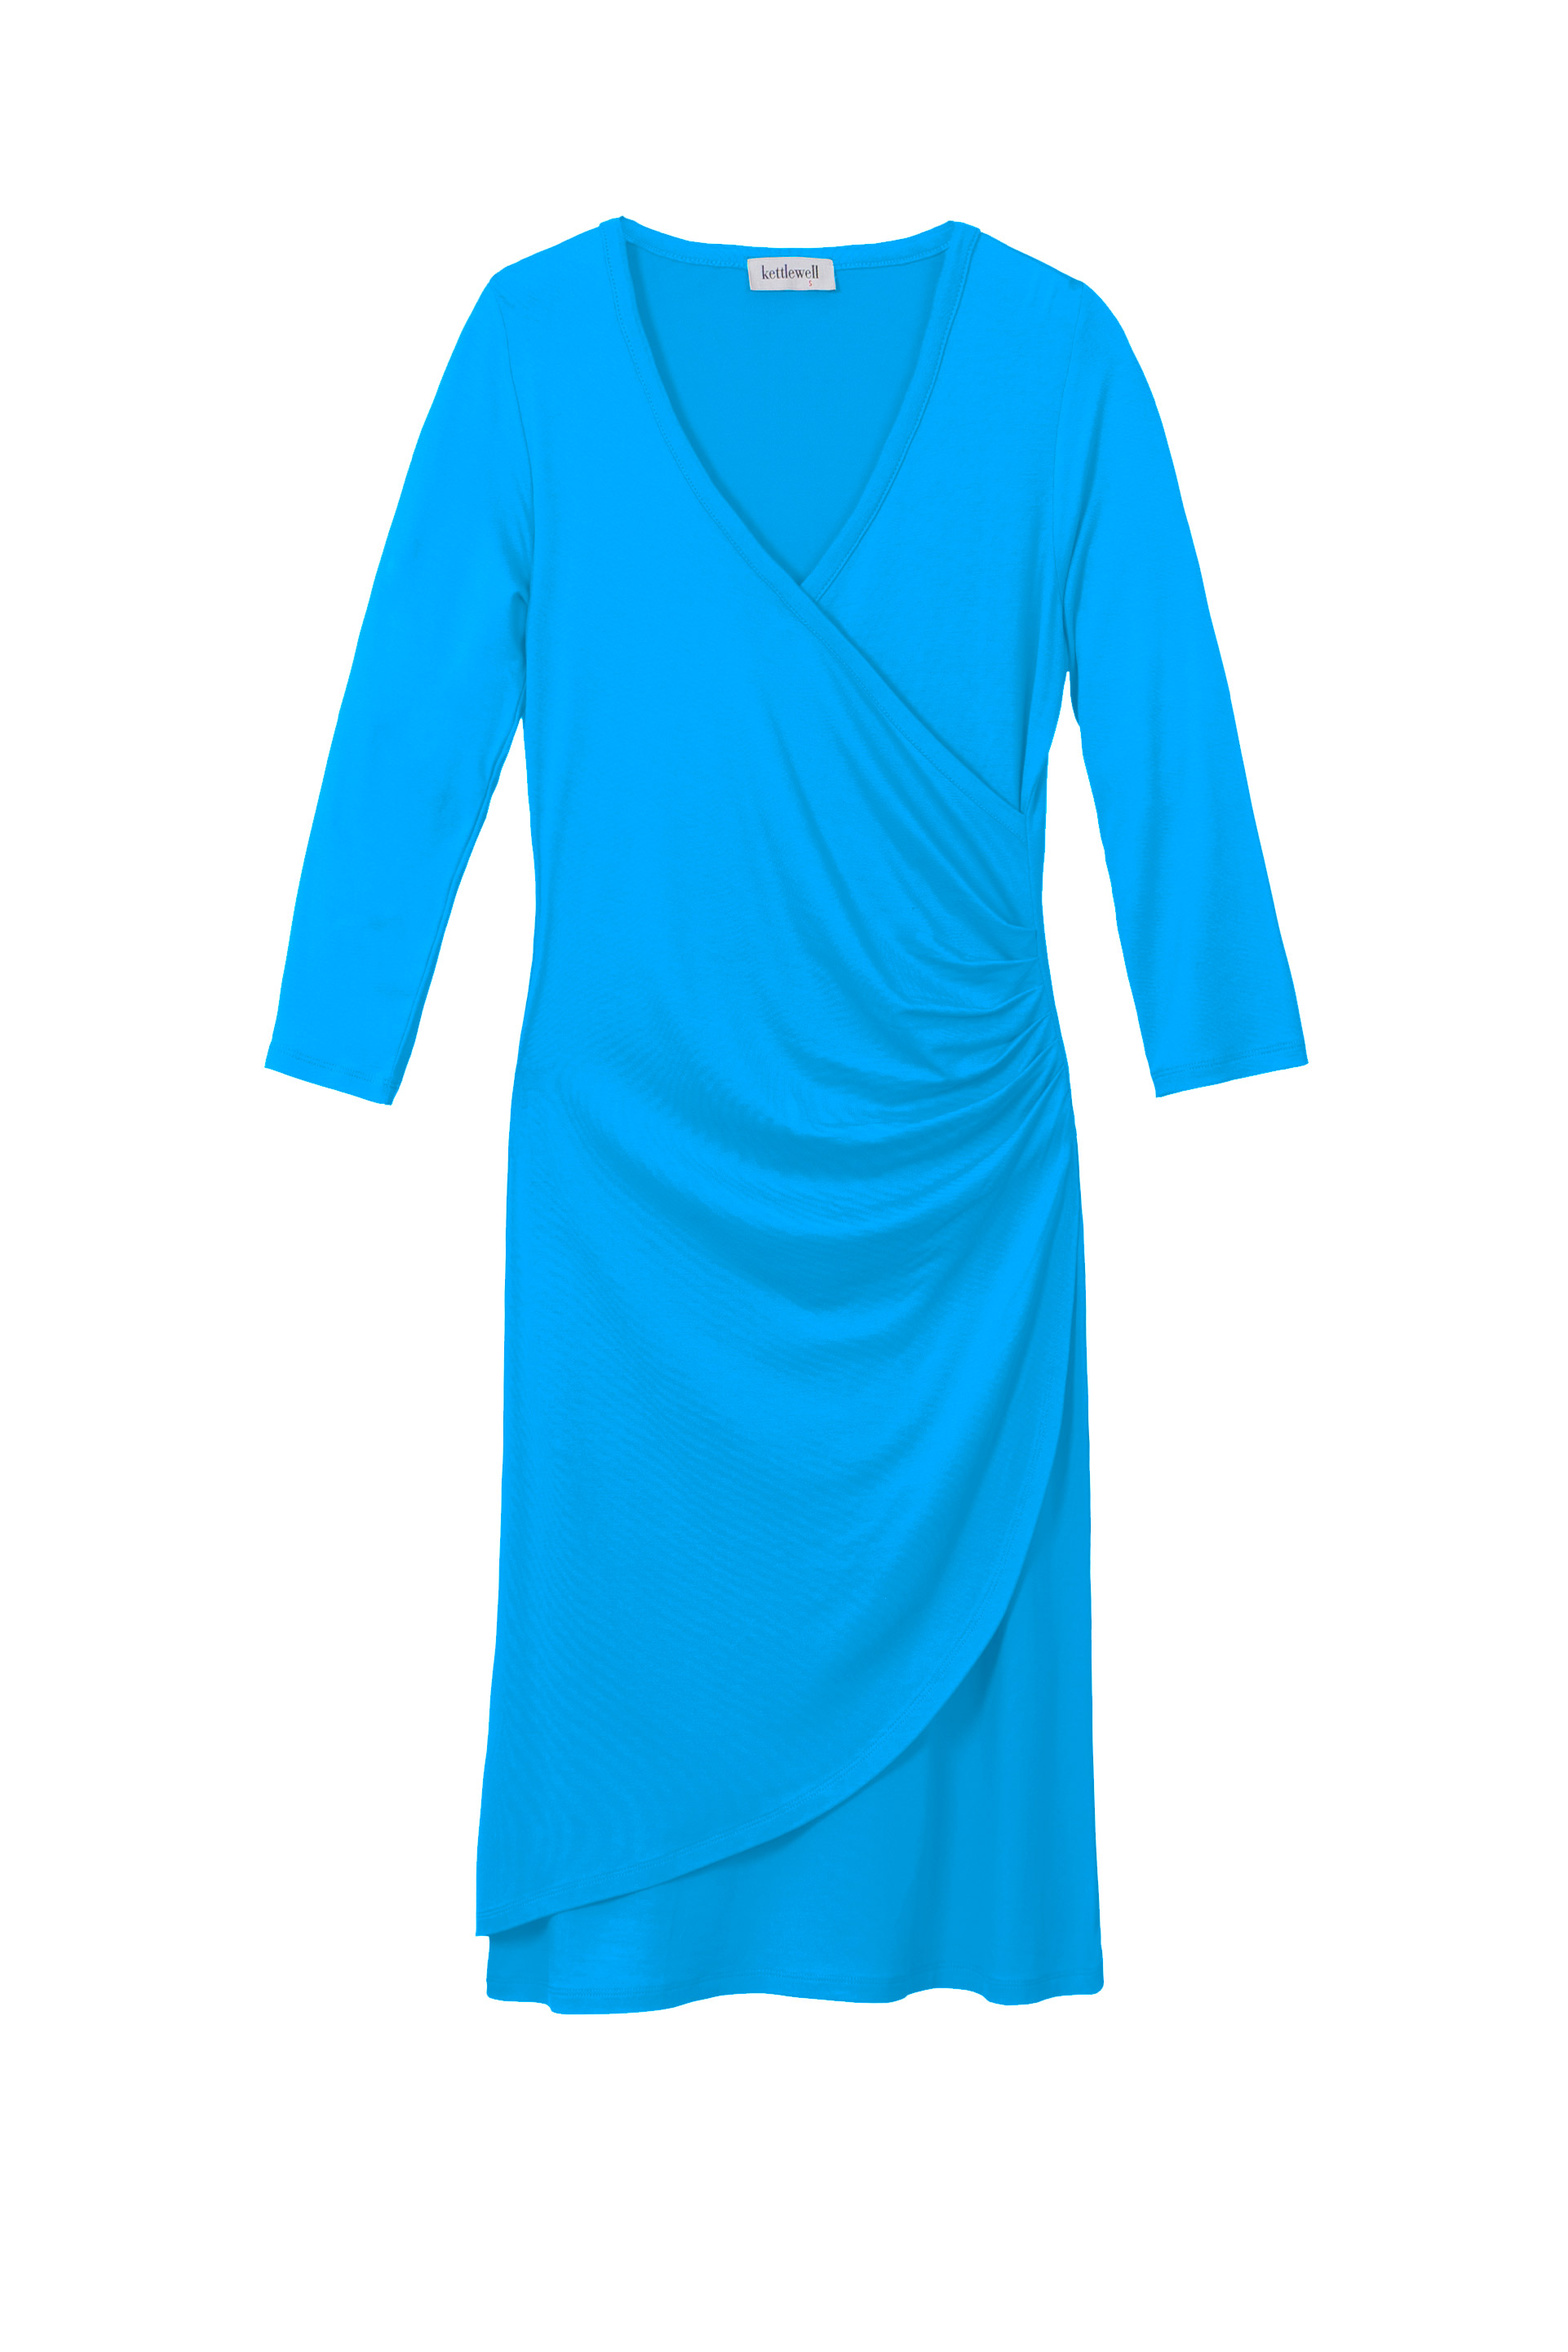 7346_arabella_dress_3.4_sleeve_chinese_blue.jpg